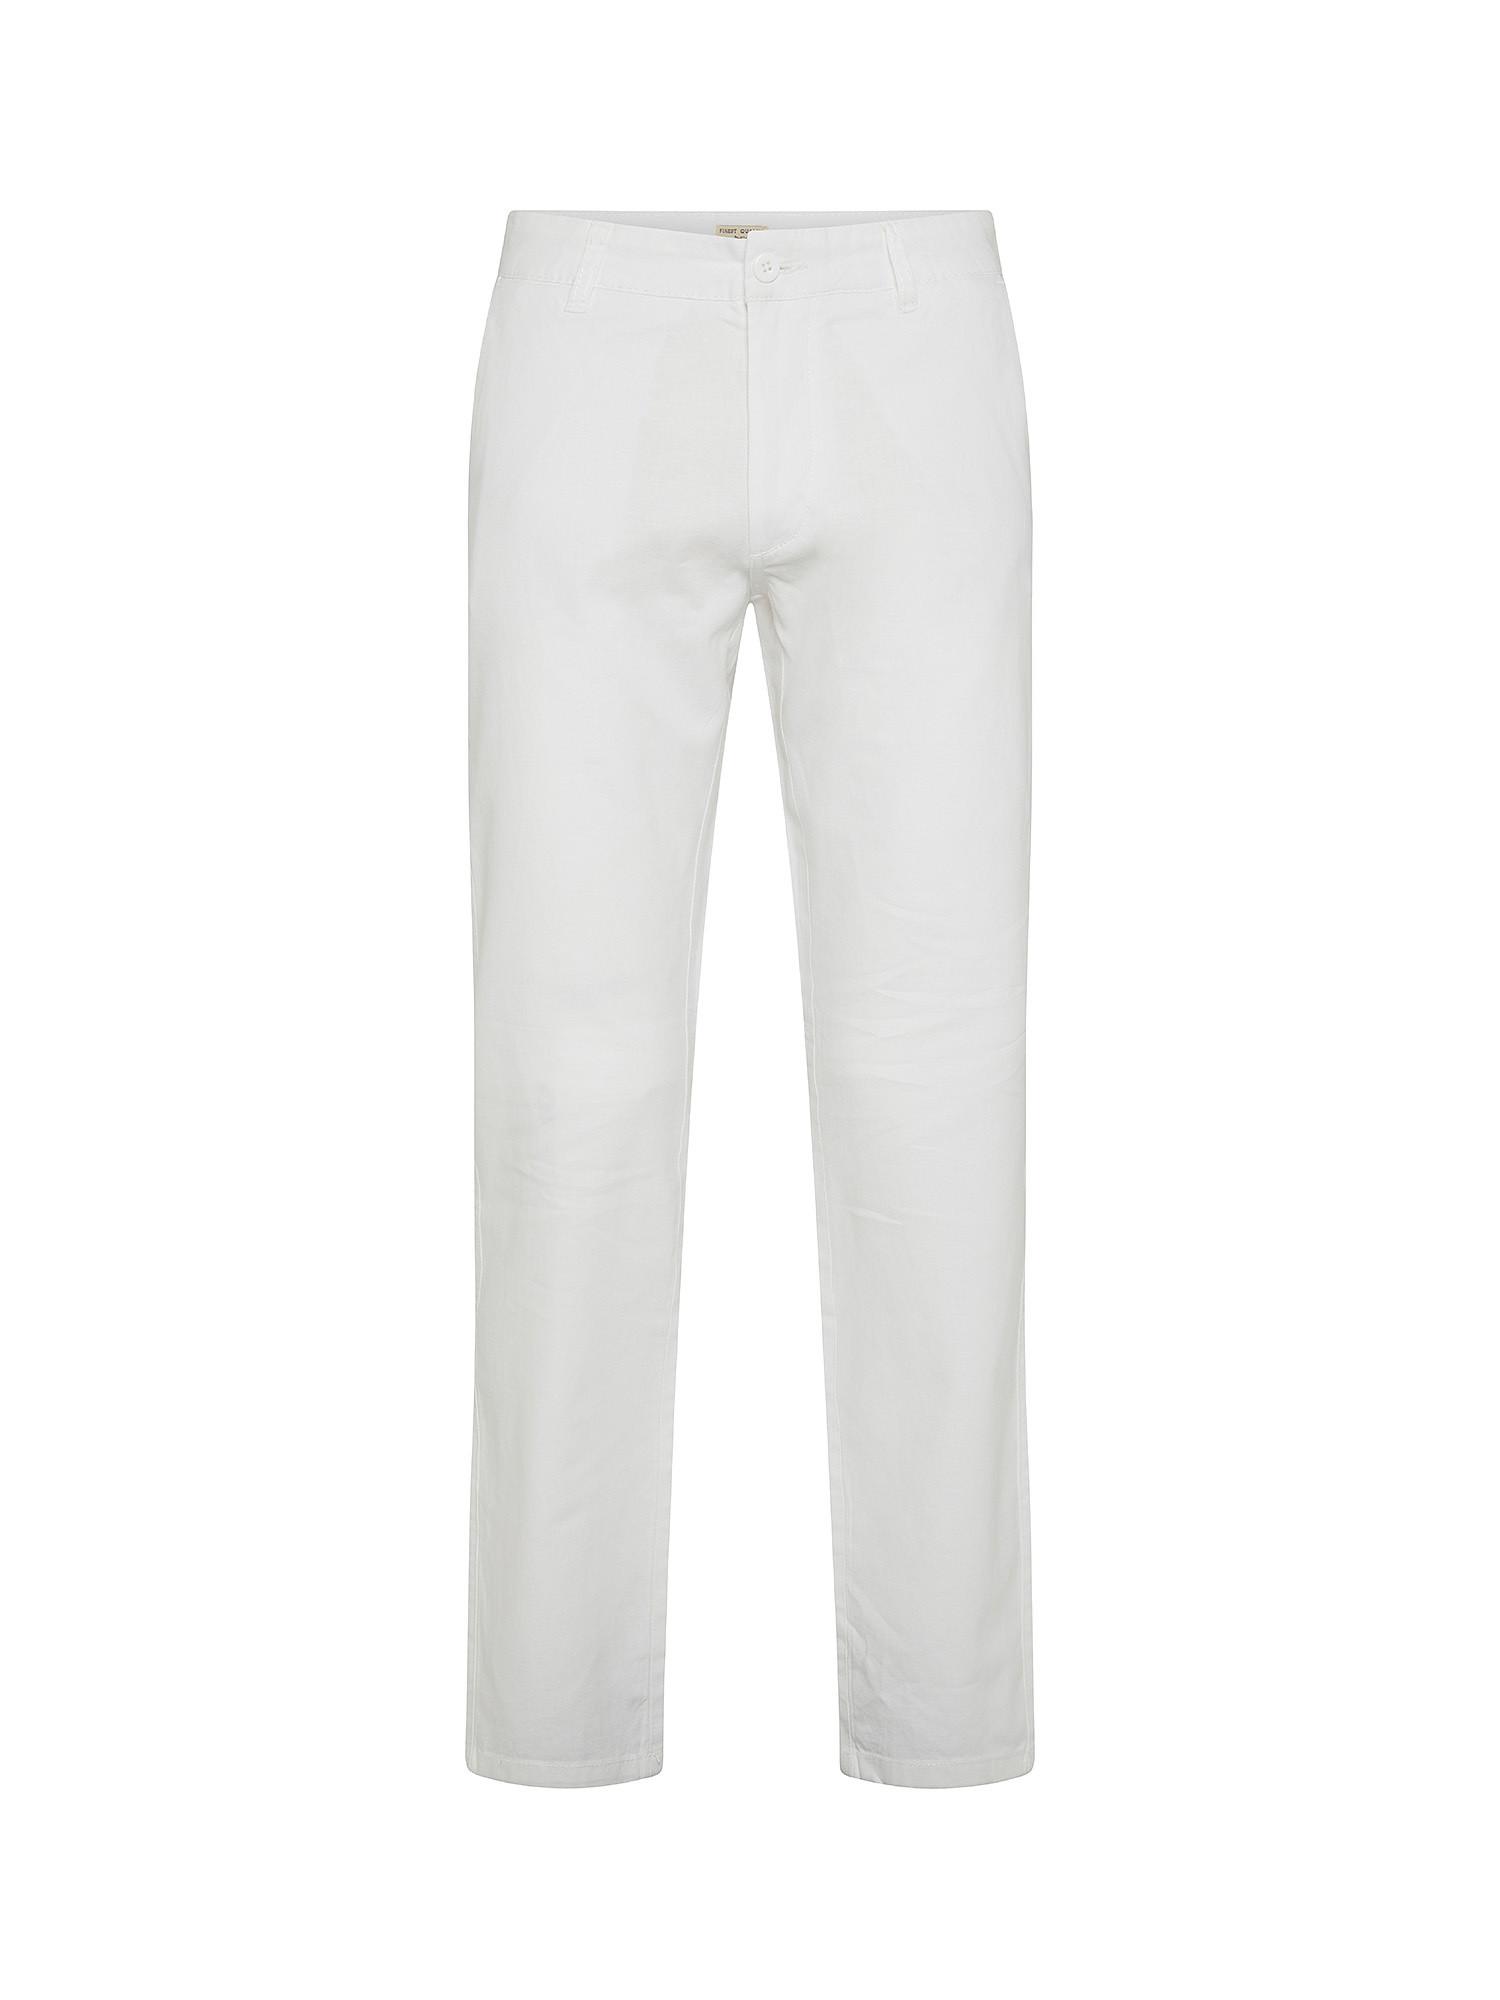 JCT - Pantaloni chino in misto lino, Bianco, large image number 0